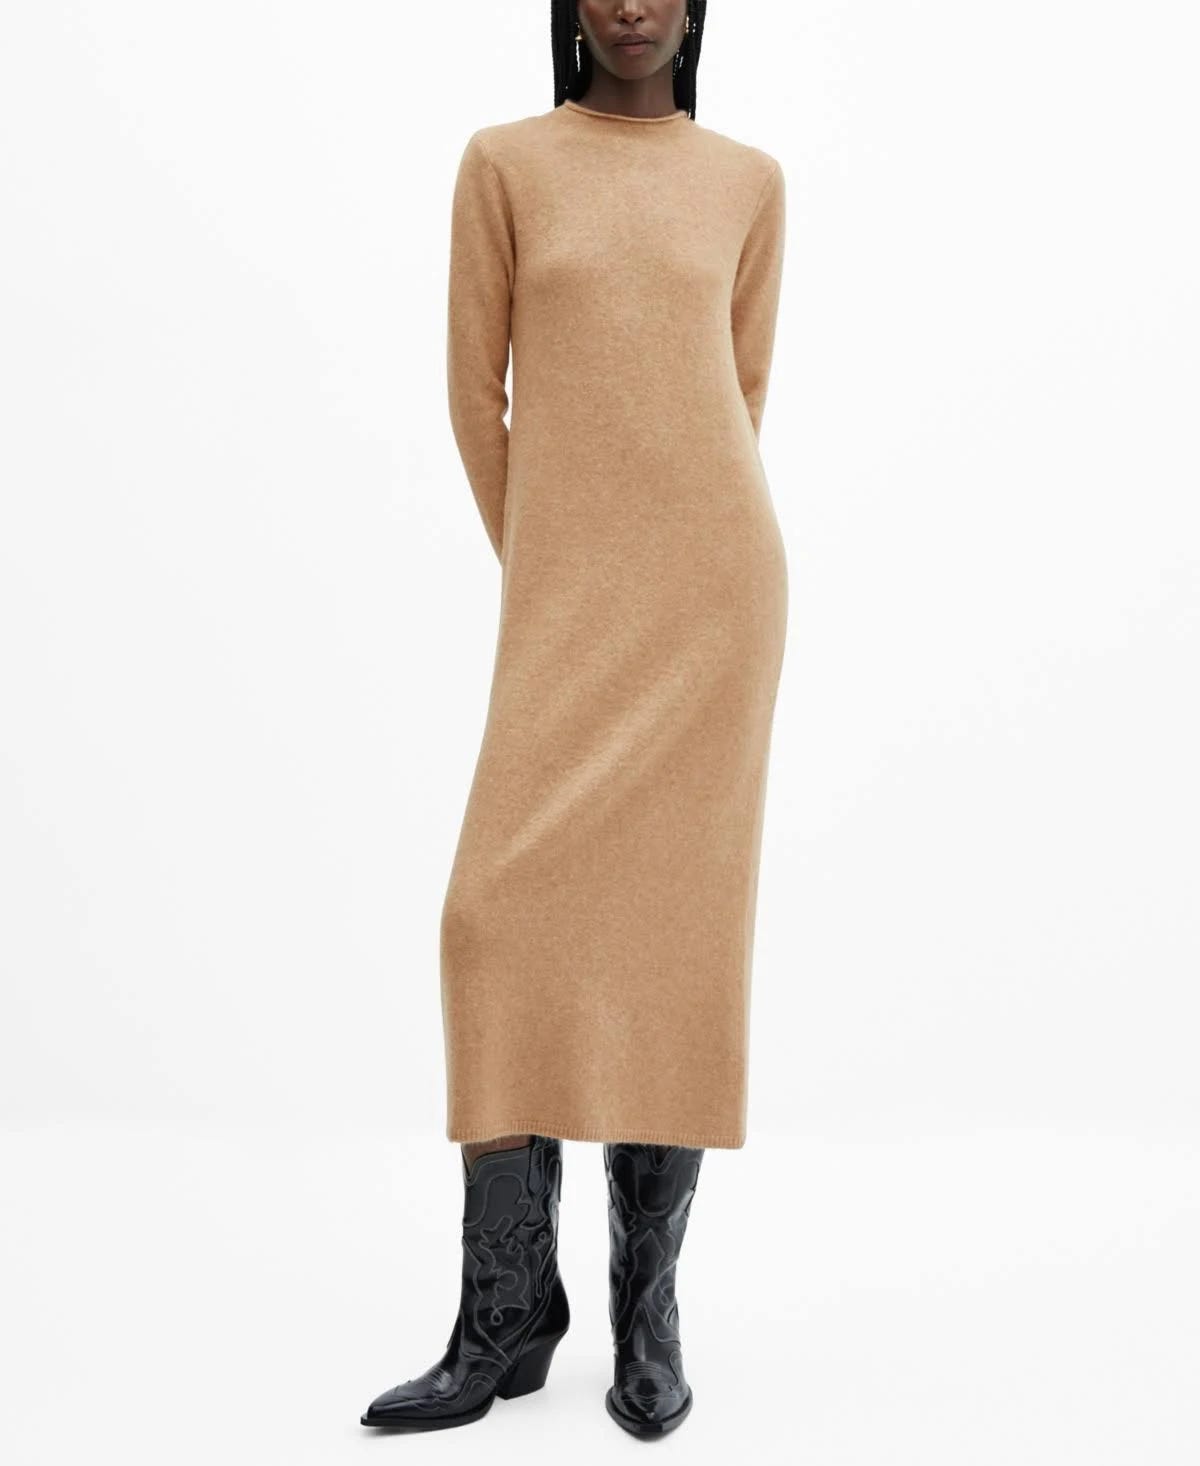 Comfortable Midi Dress for Women: Mango Knit Dress in Medium Brown | Image